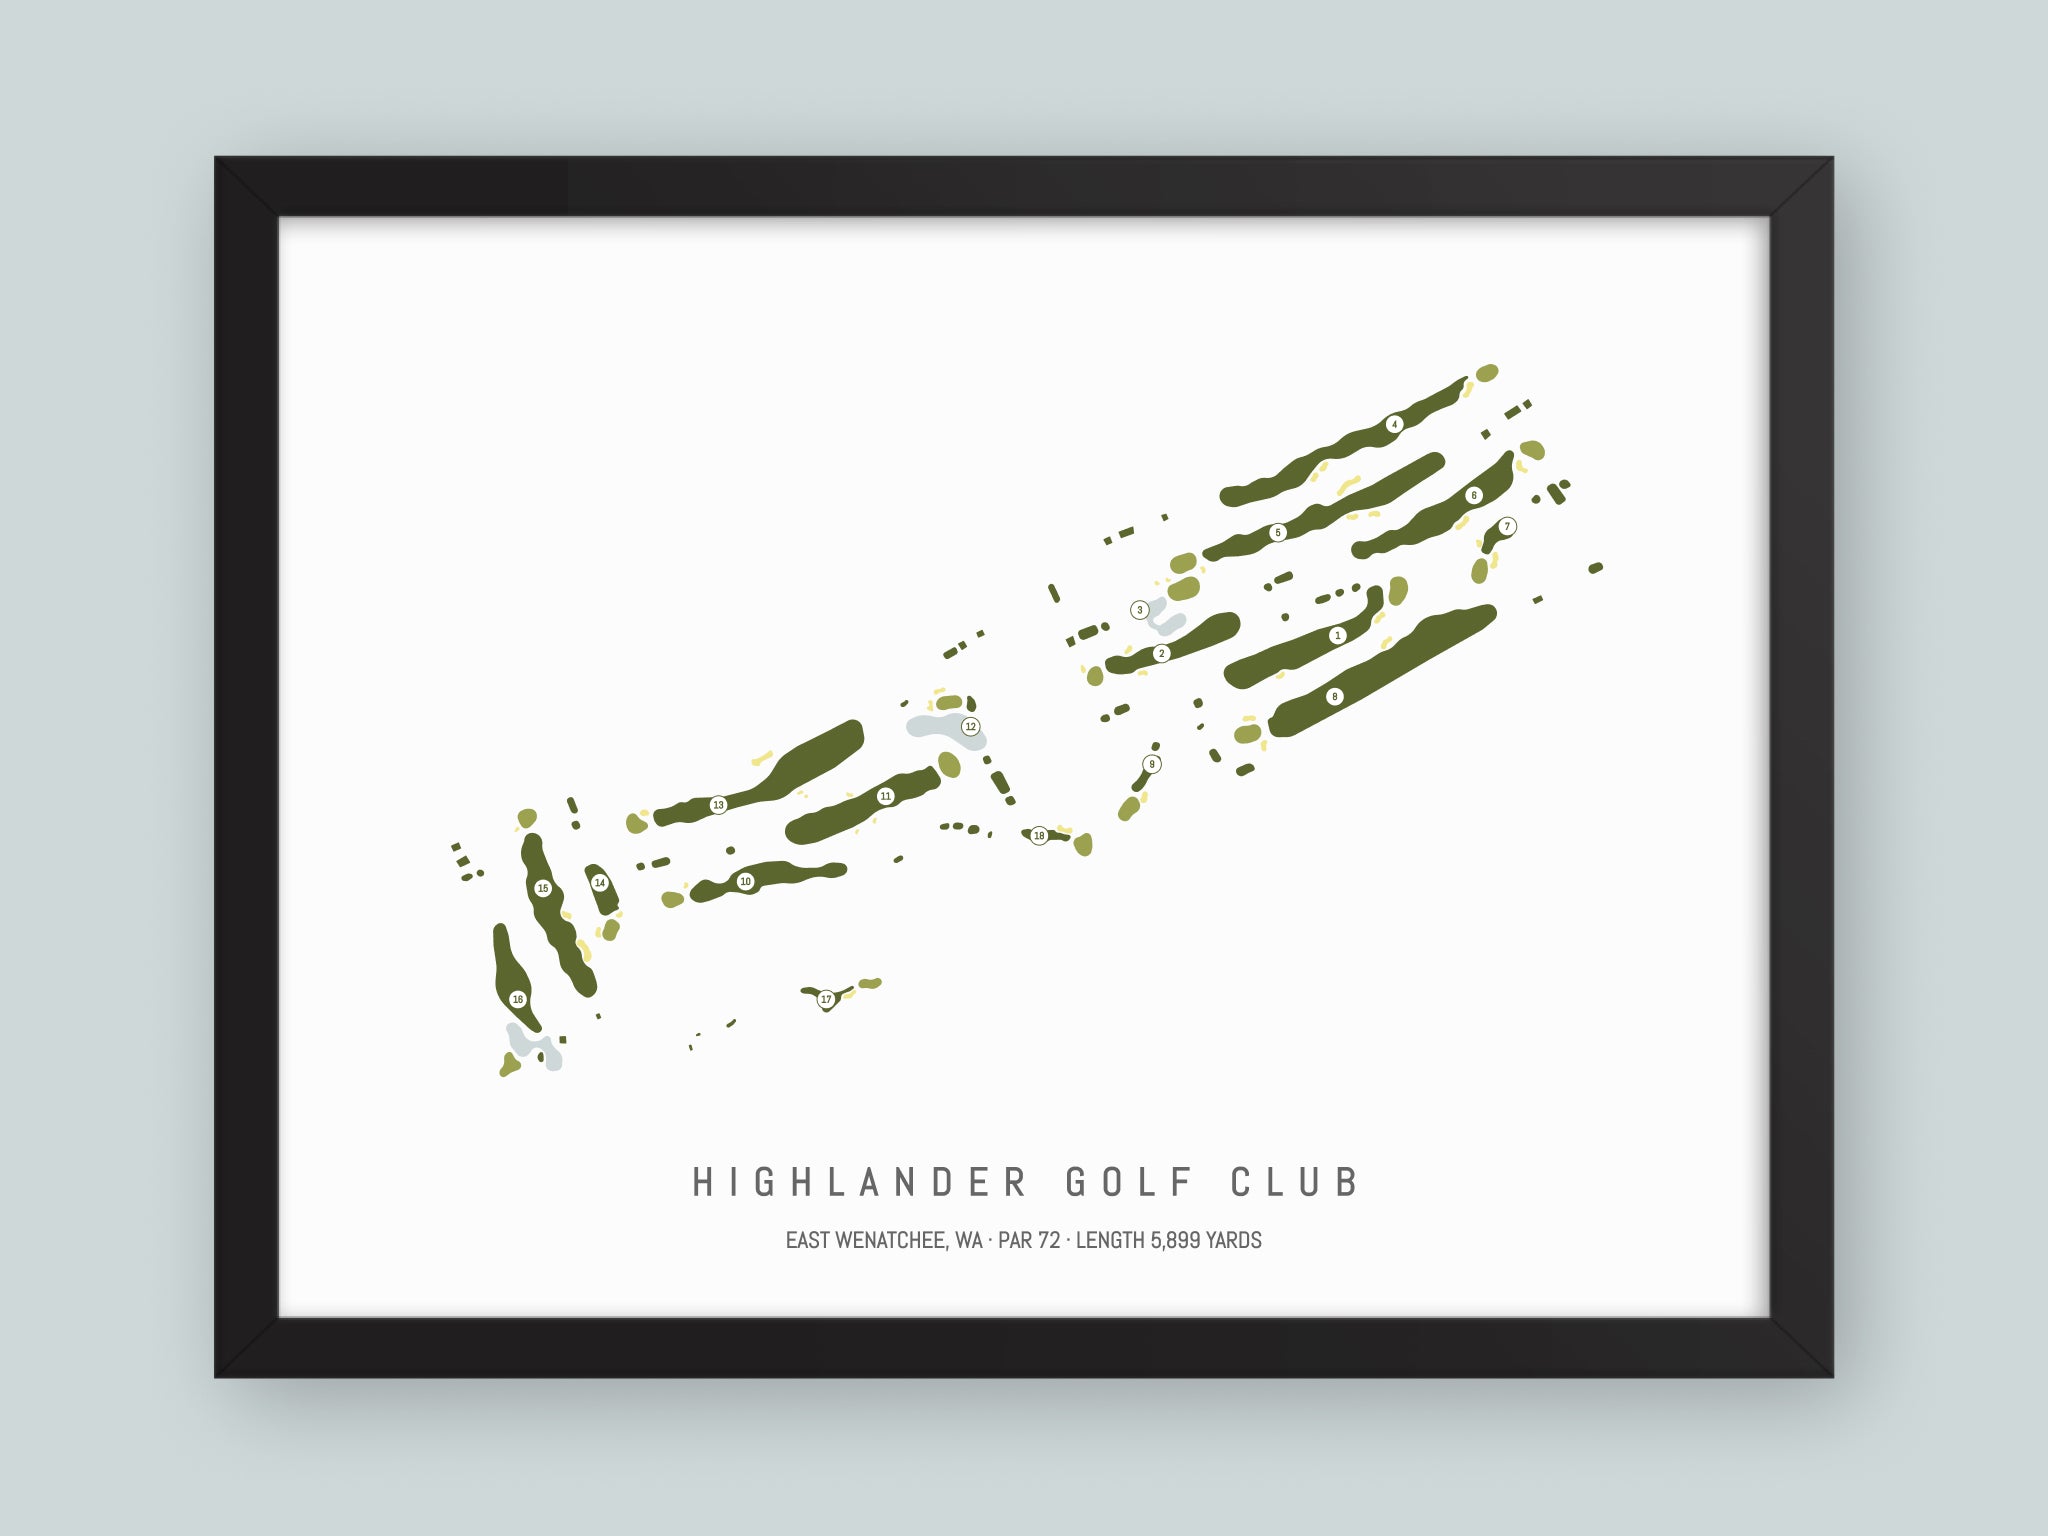 Highlander-Golf-Club-WA--Black-Frame-24x18-With-Hole-Numbers